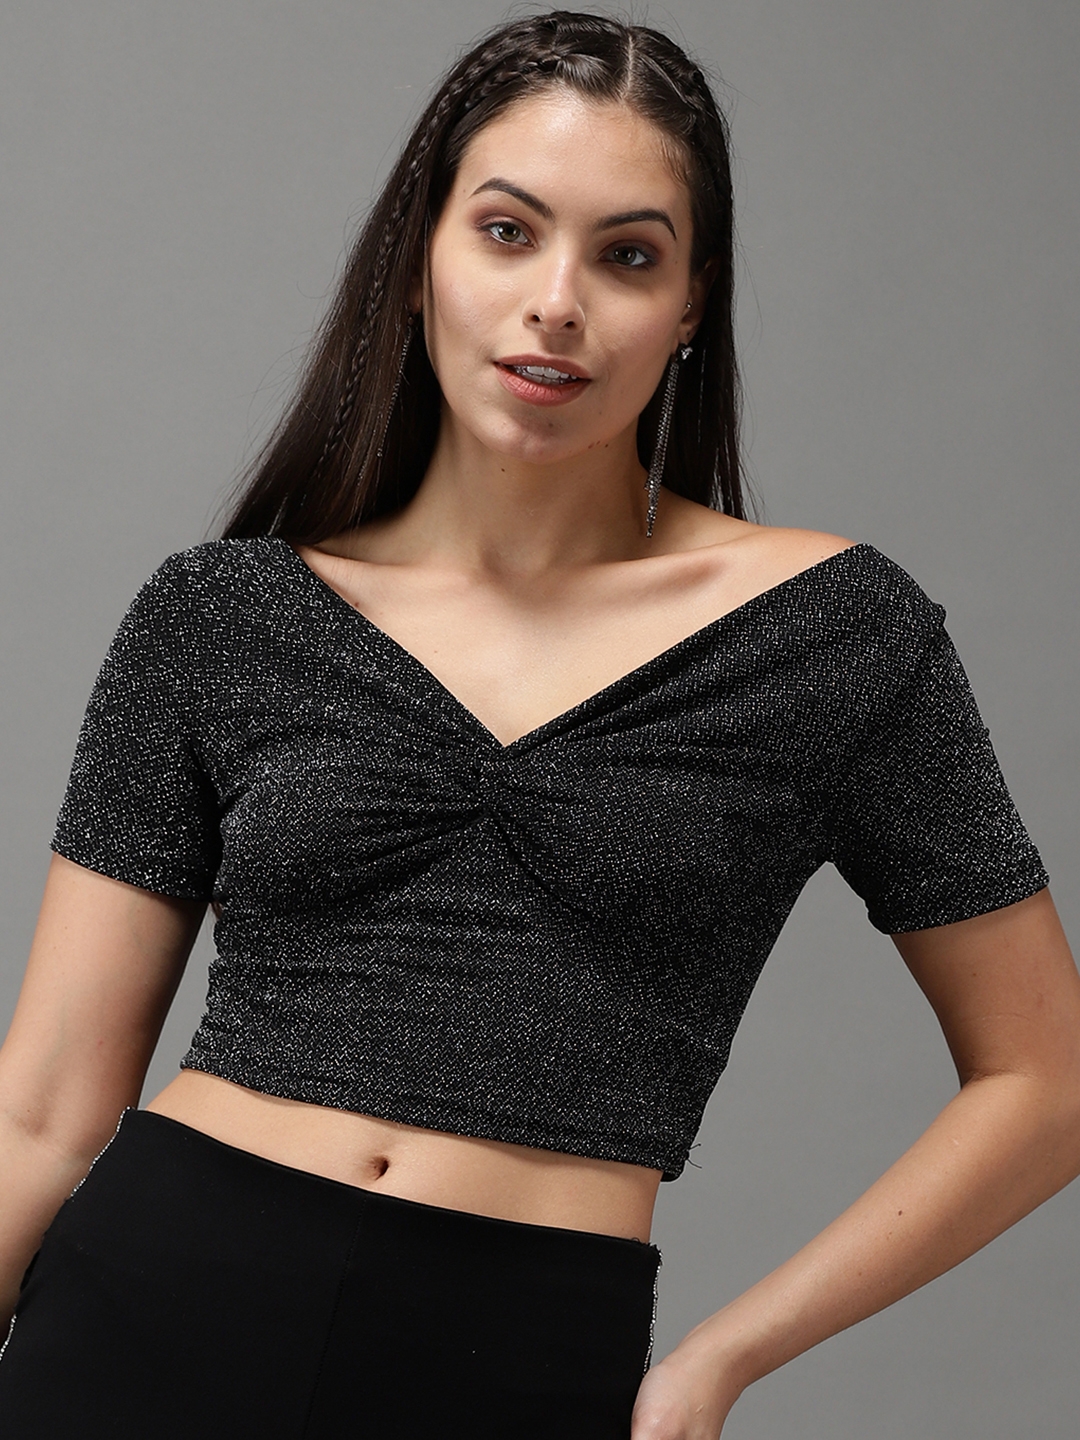 Women's Black Polyester Solid Crop Top